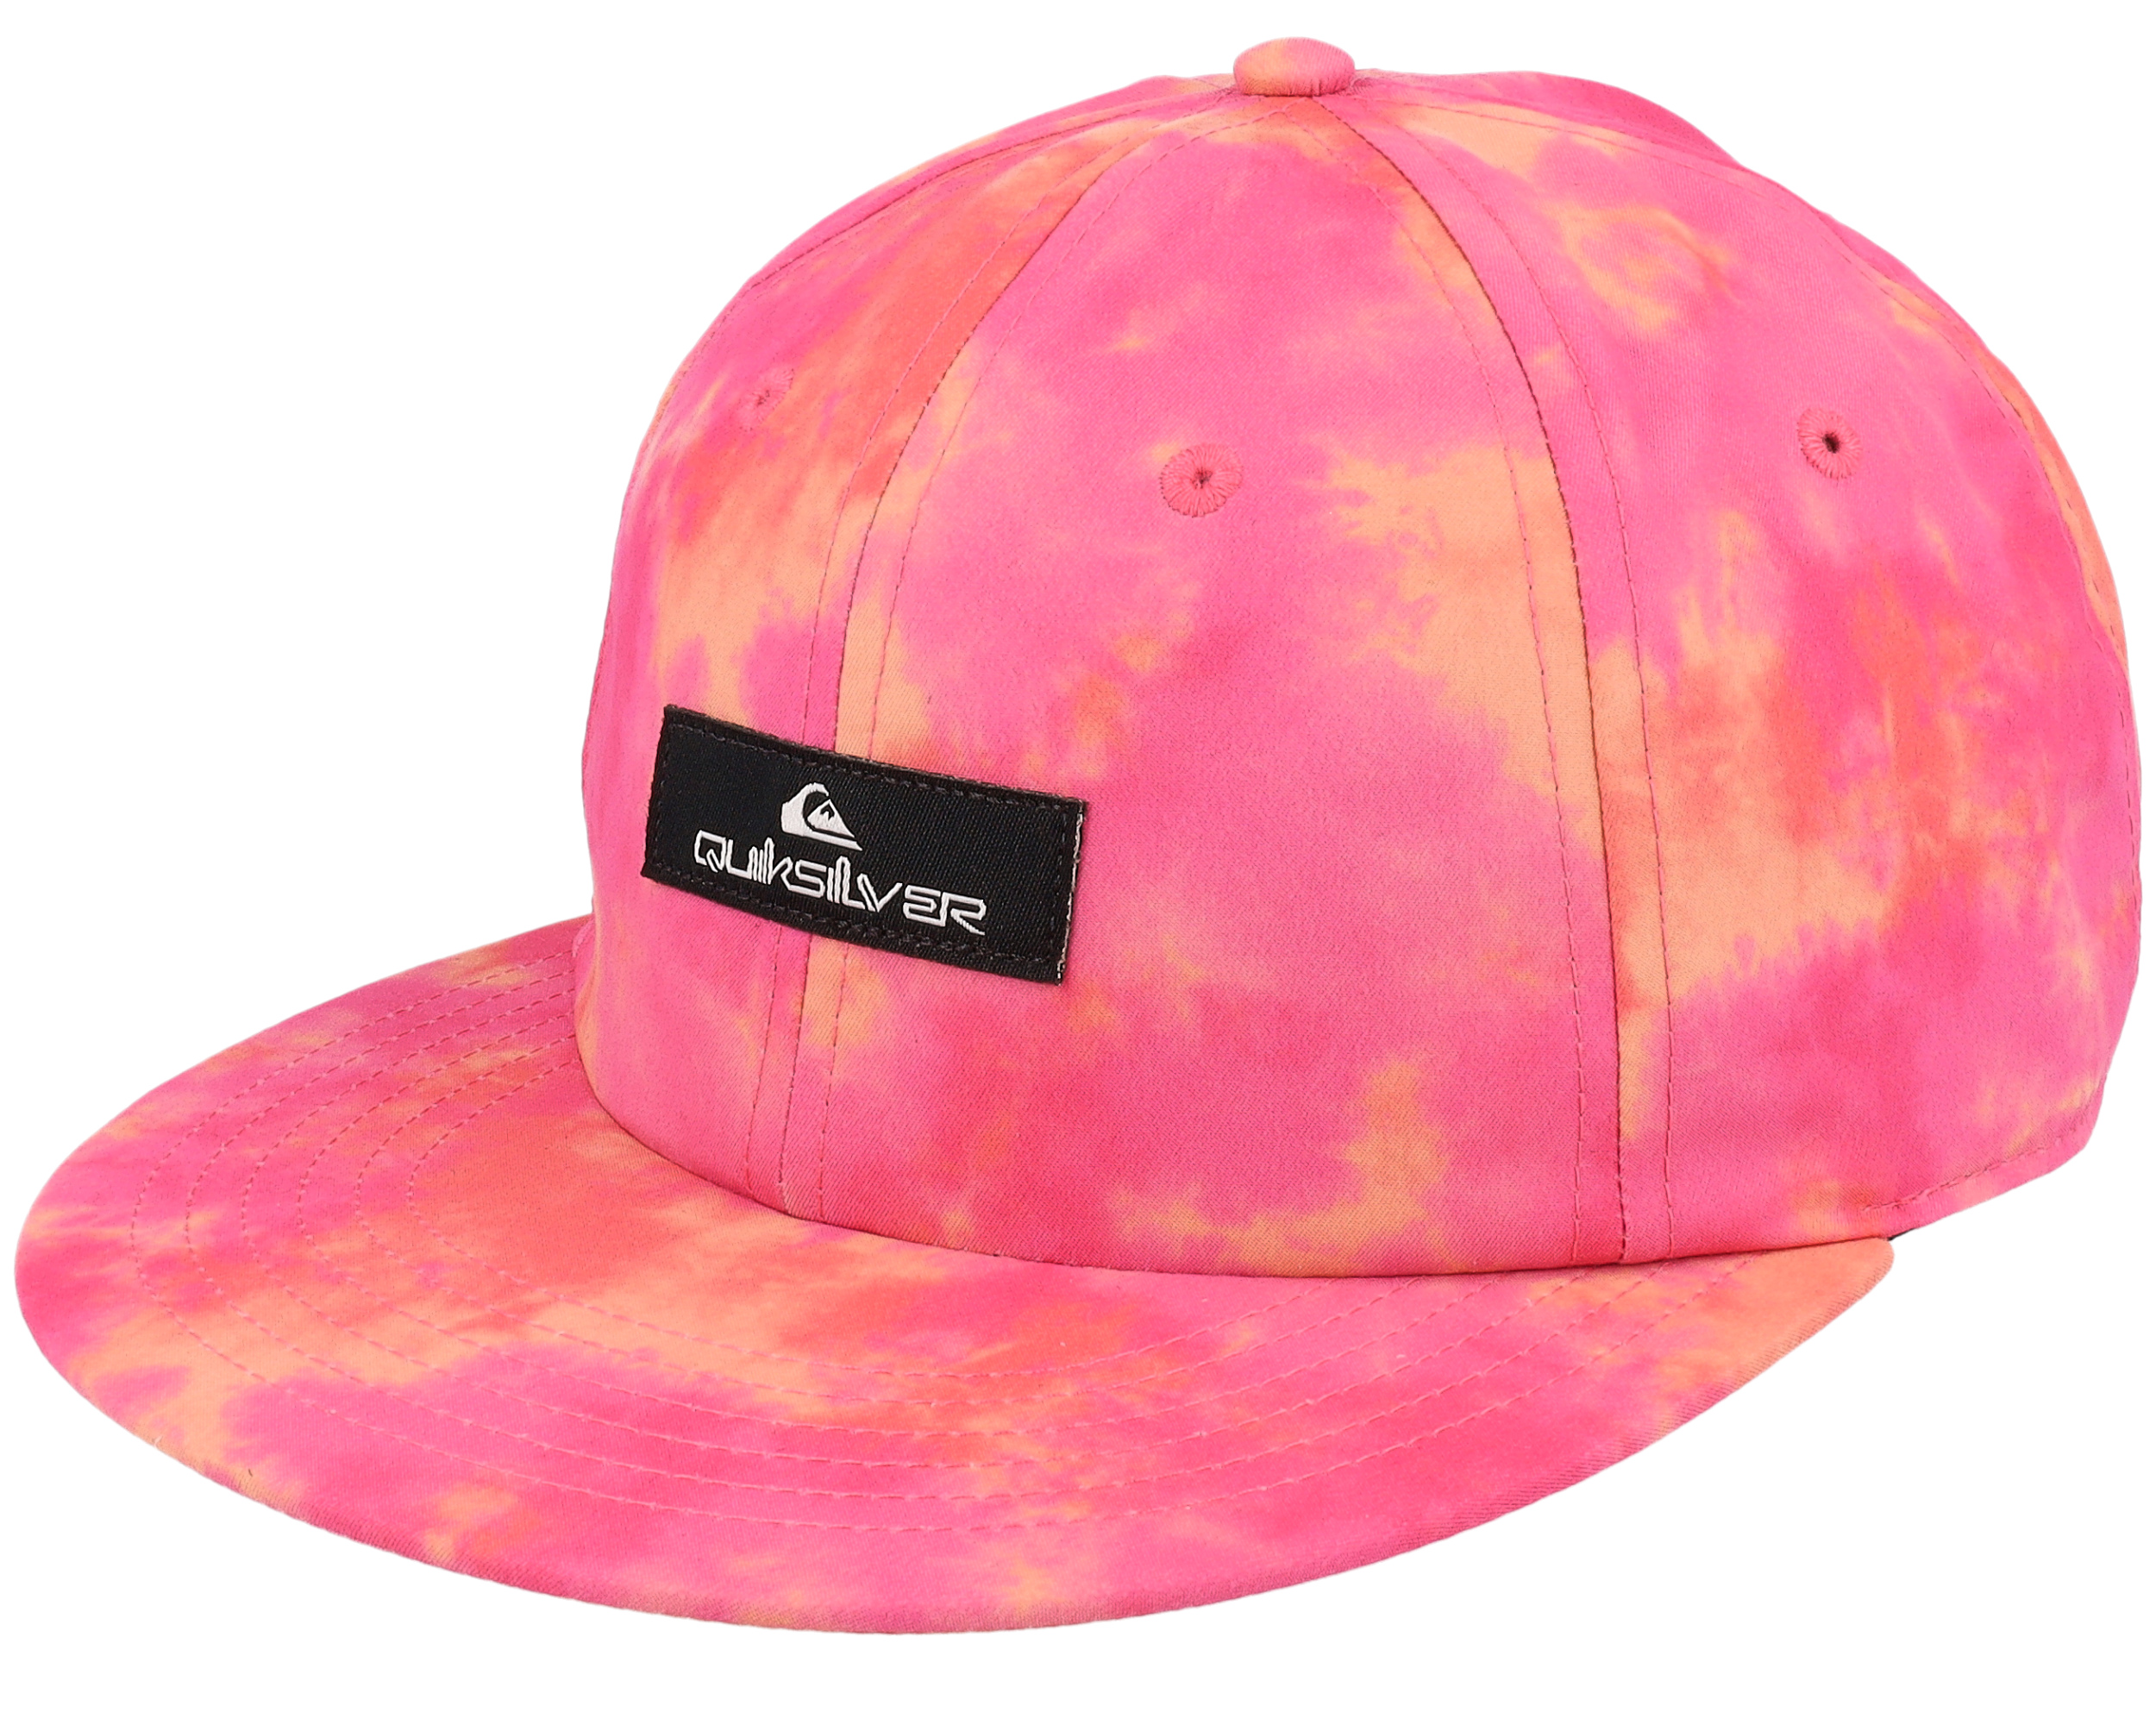 - Shocking cap Lucid Dreams Pink Quiksilver Snapback